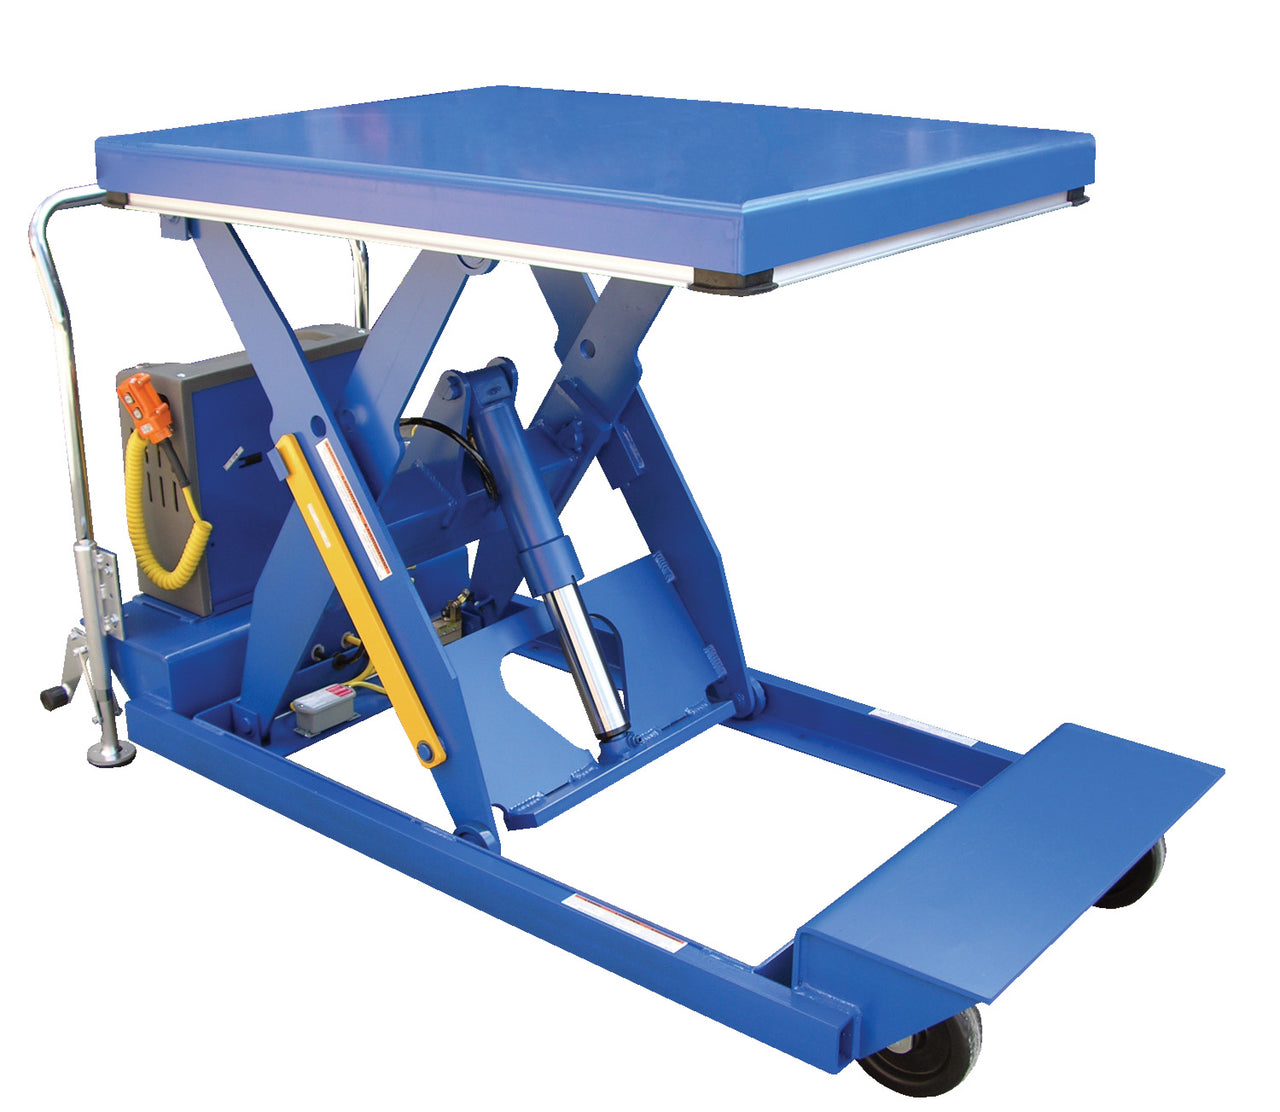 1,000-lbs Capacity Portable Scissor Lift Table w/ 10" to 58" Service Range